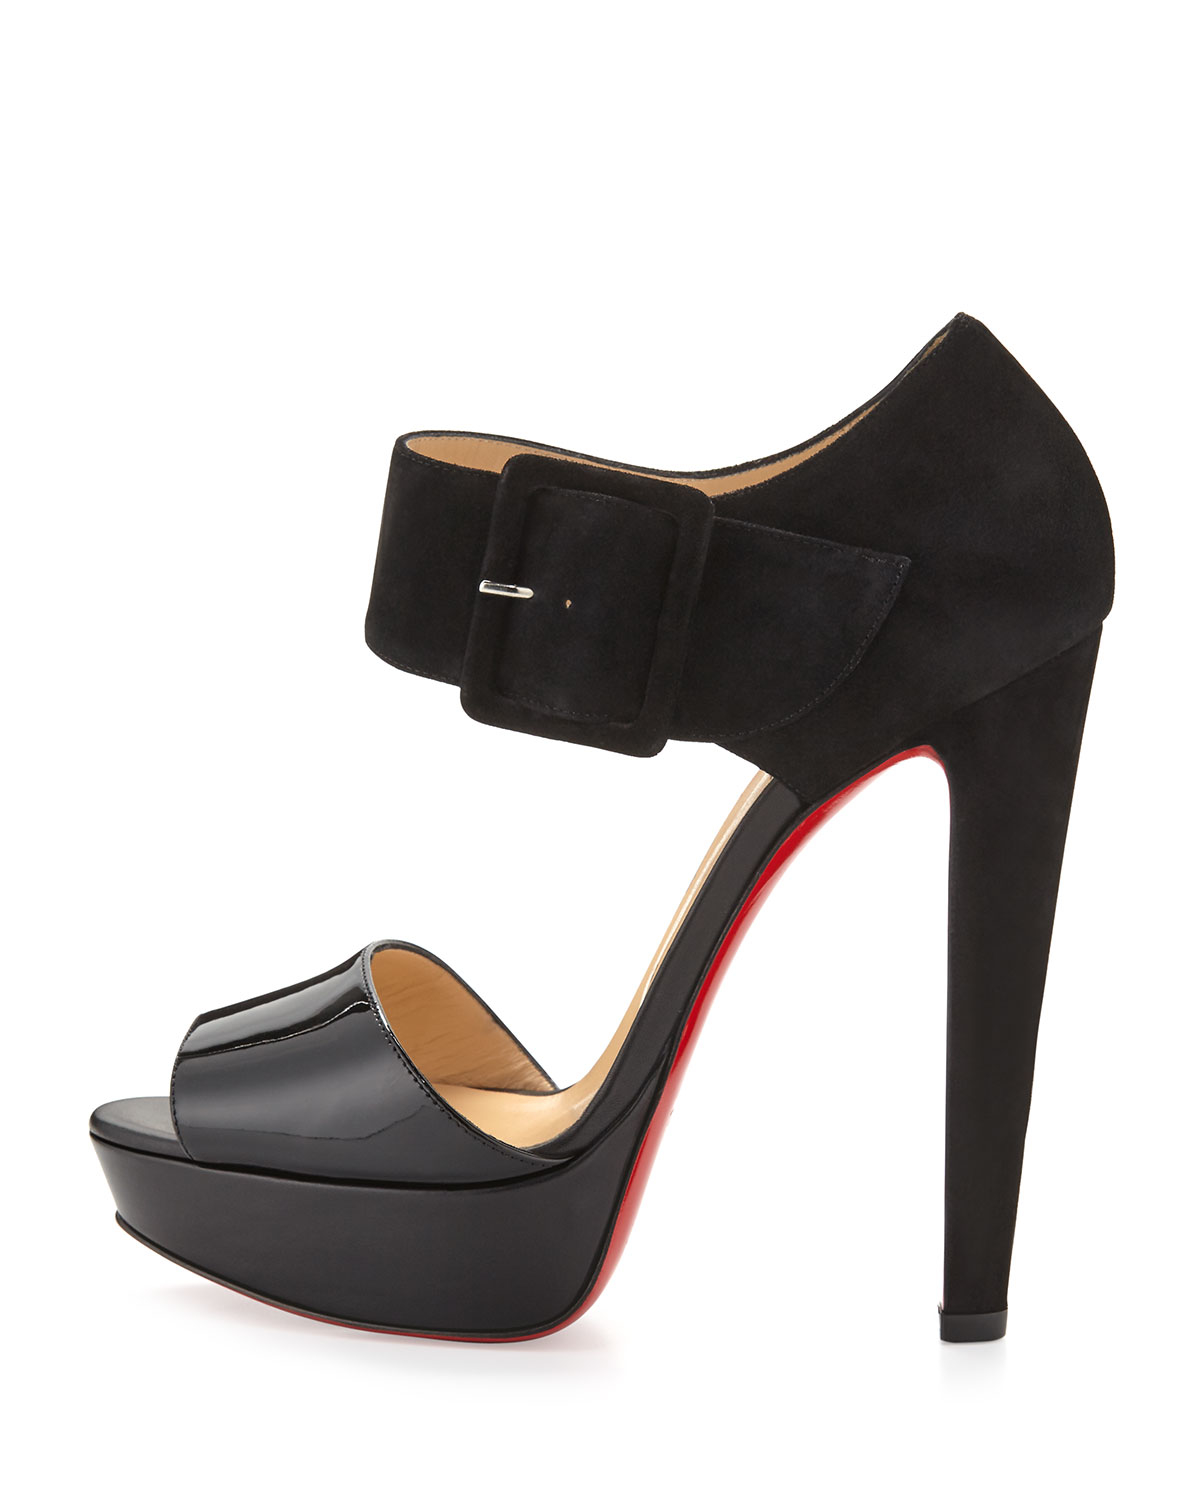 us replica cl shoes - Christian louboutin Haute Rettenue 140mm Red Sole Sandal in Black ...